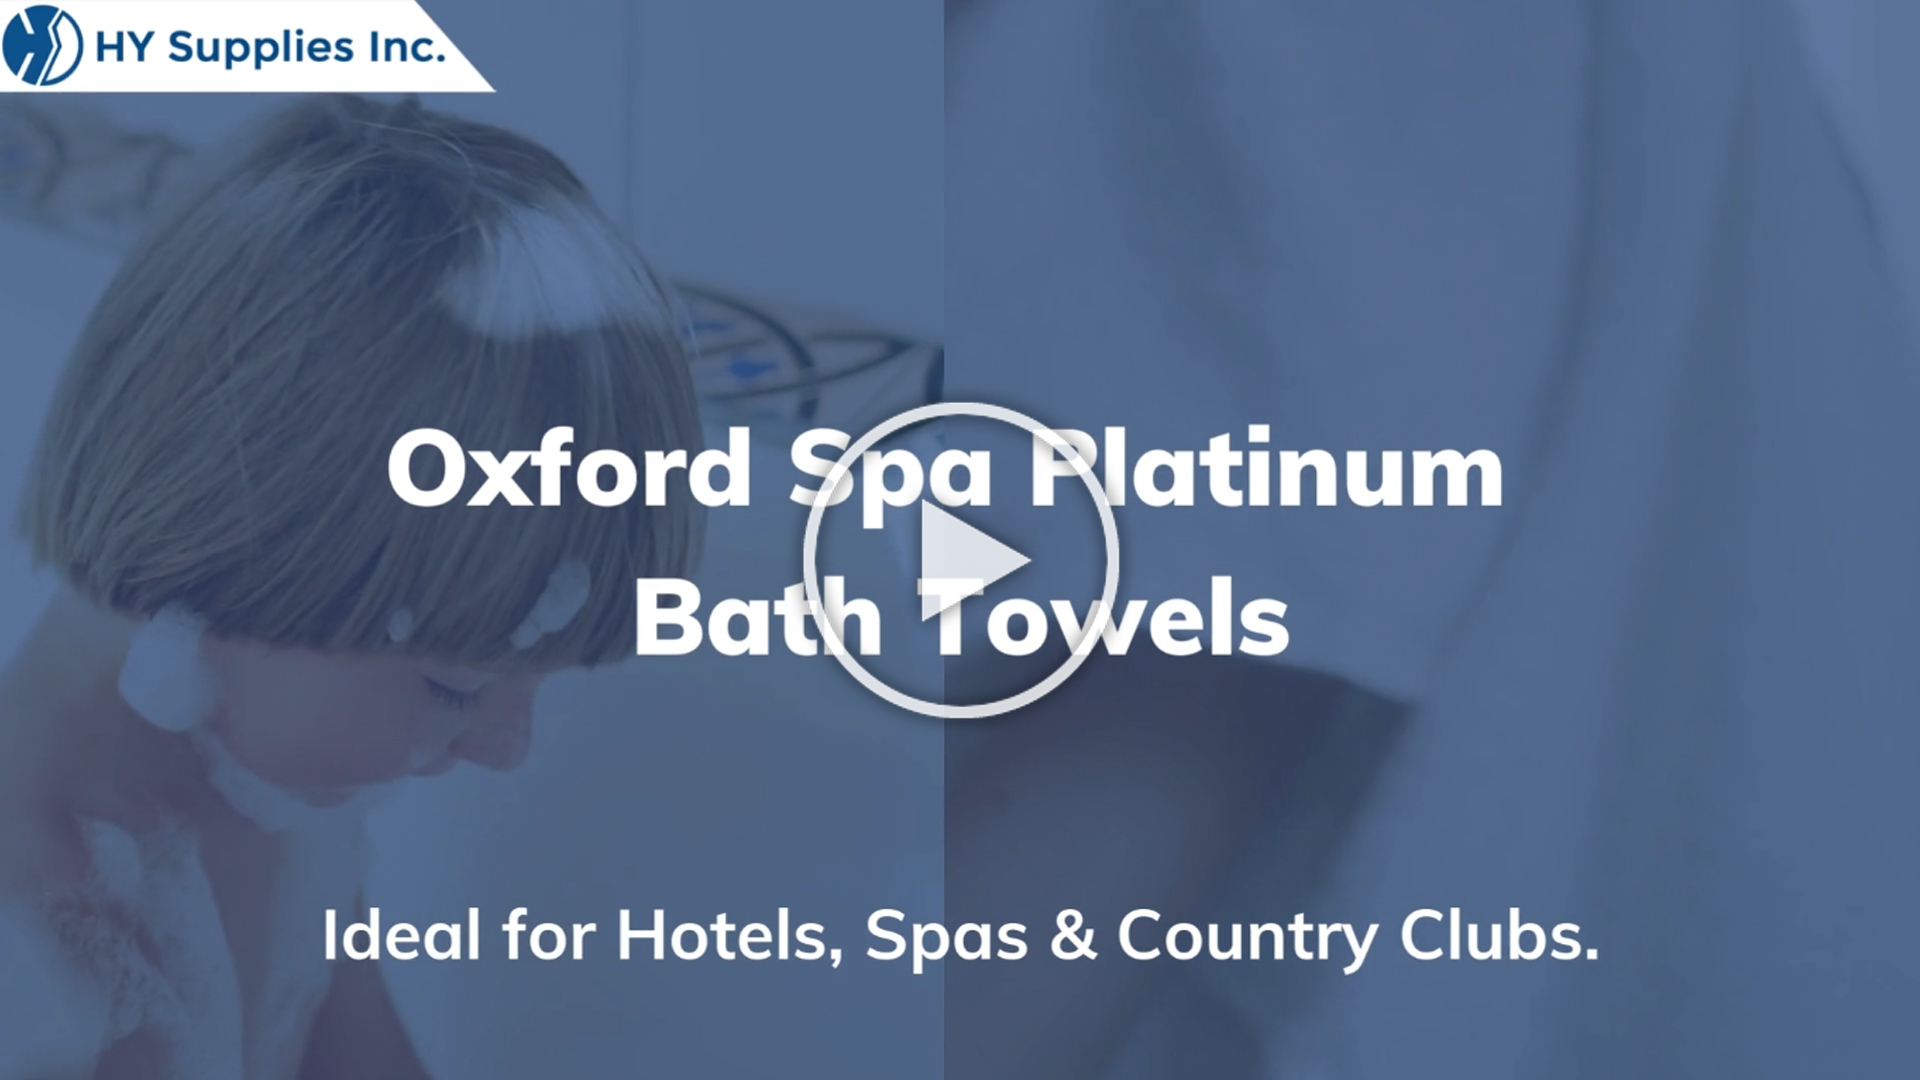 Oxford Spa Platinum Bath Towels